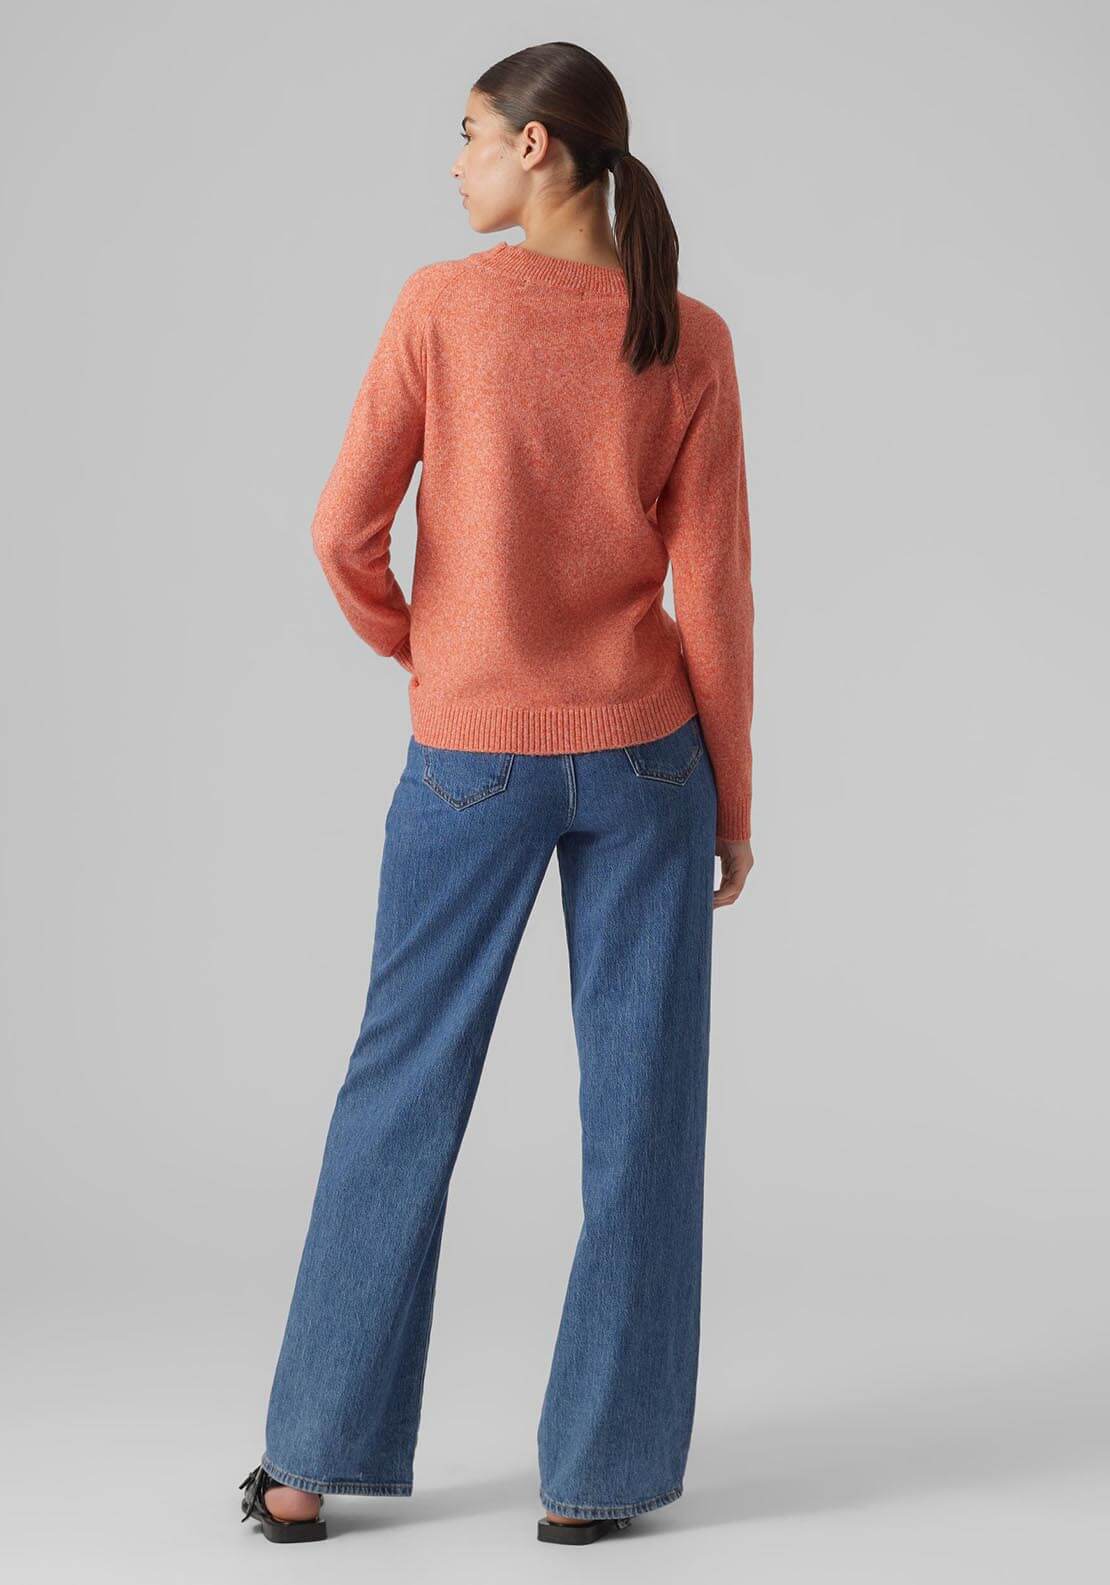 Vero Moda Pullover Jumper - Orange 3 Shaws Department Stores